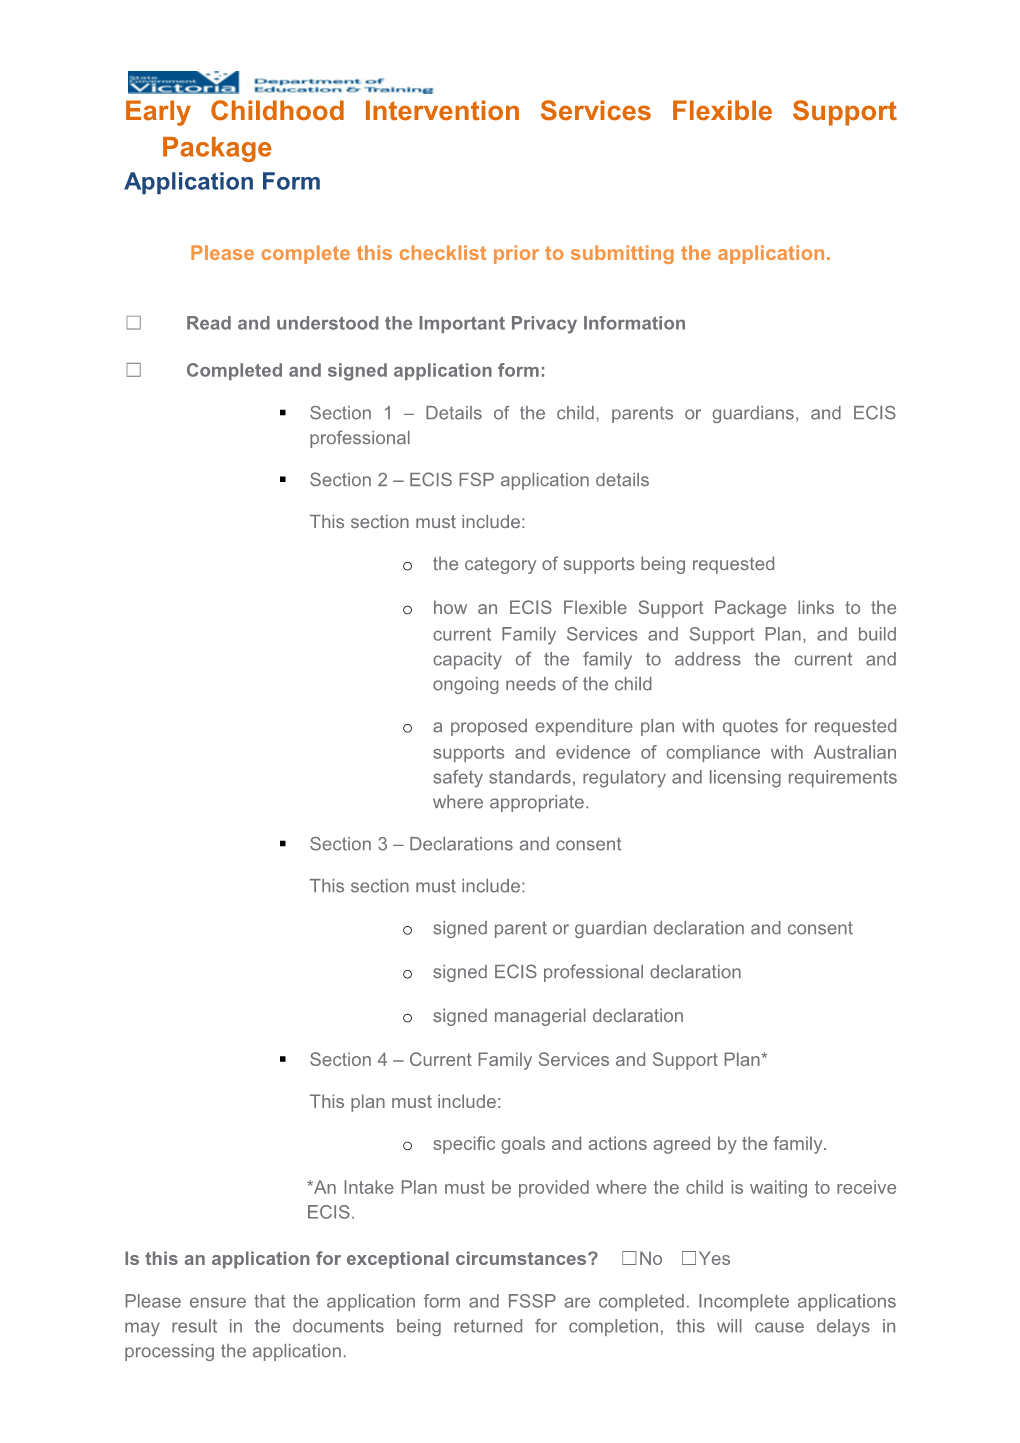 FSP Application Form (Version for Completing Online)